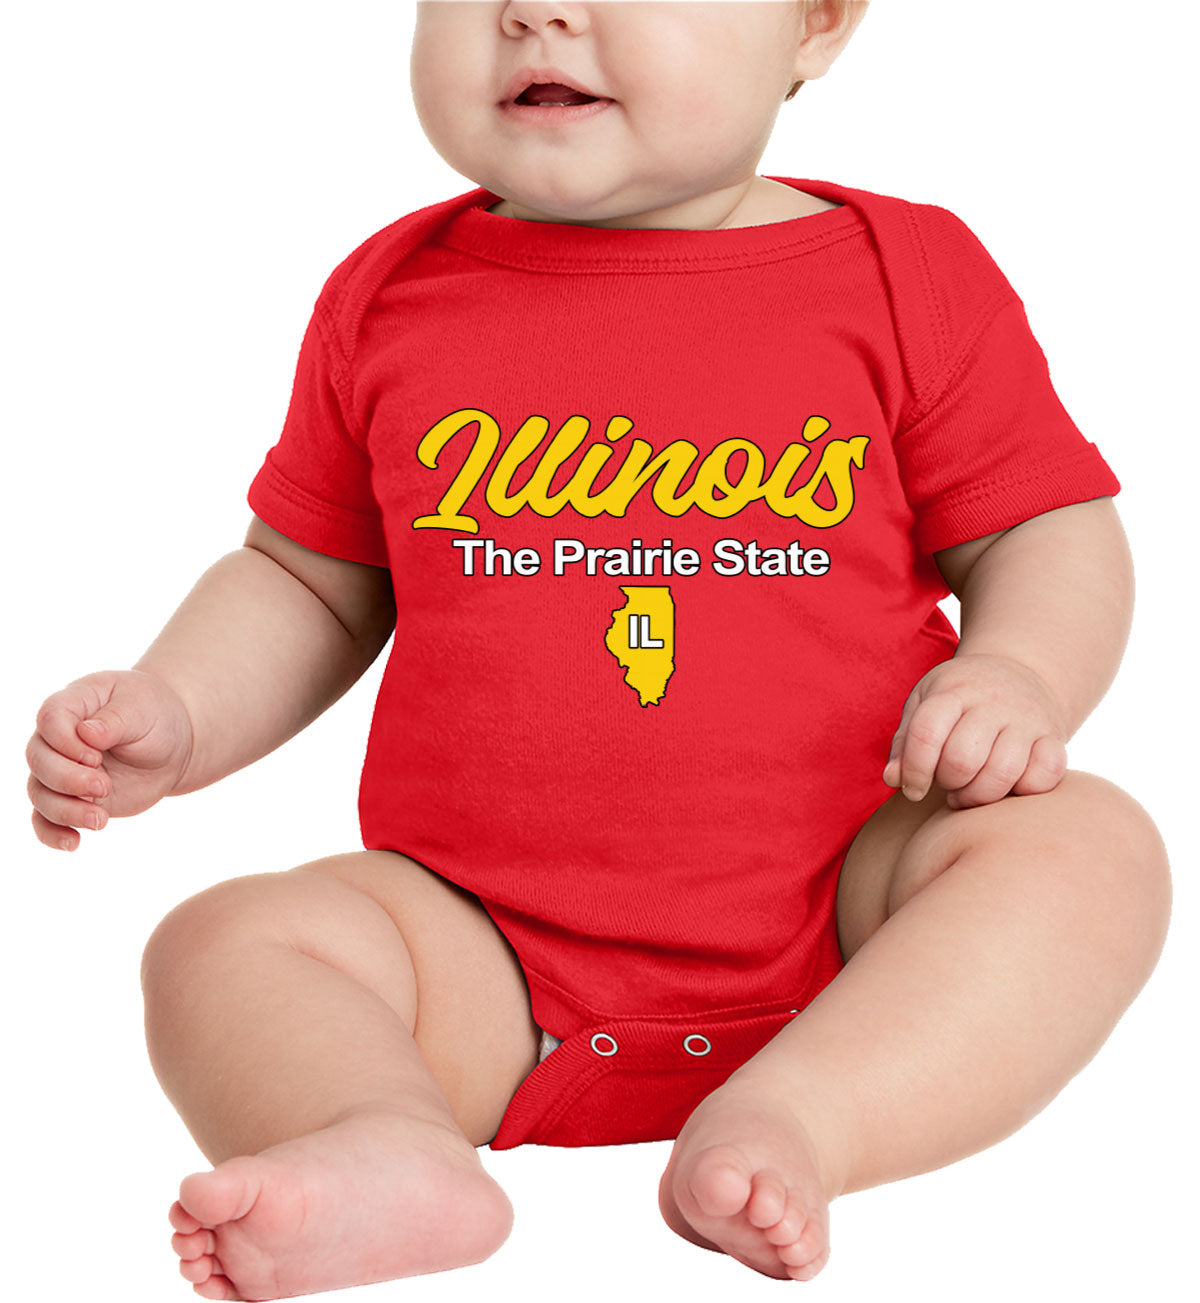 Illinois The Prairie State Baby Onesie